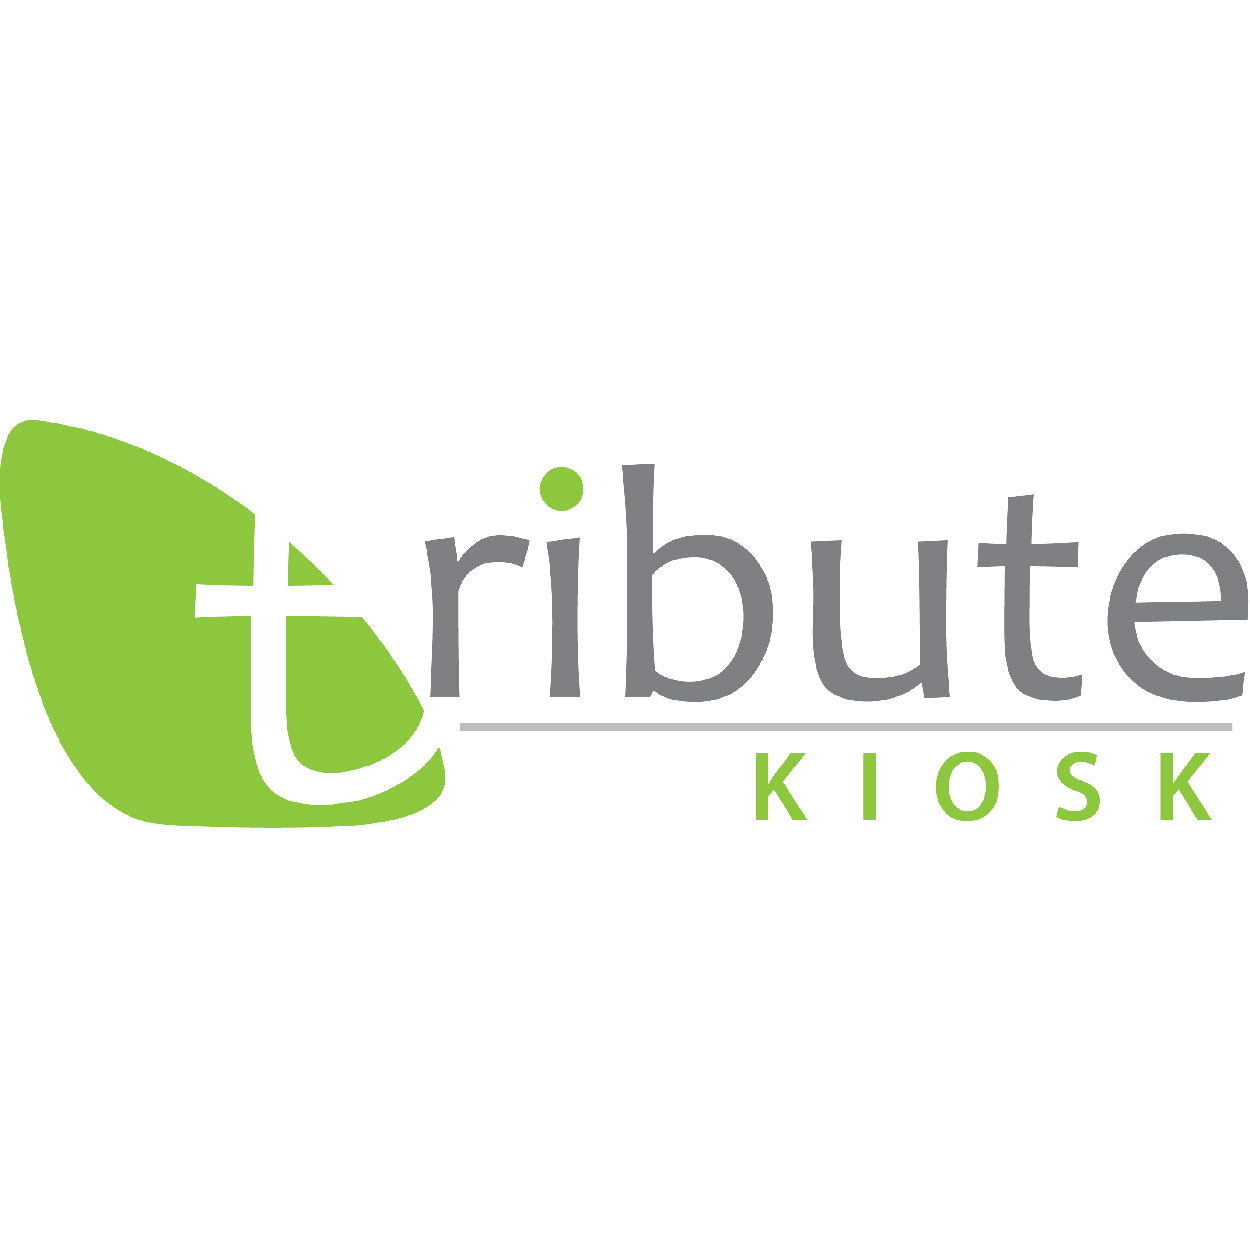 (c) Tributekiosk.com